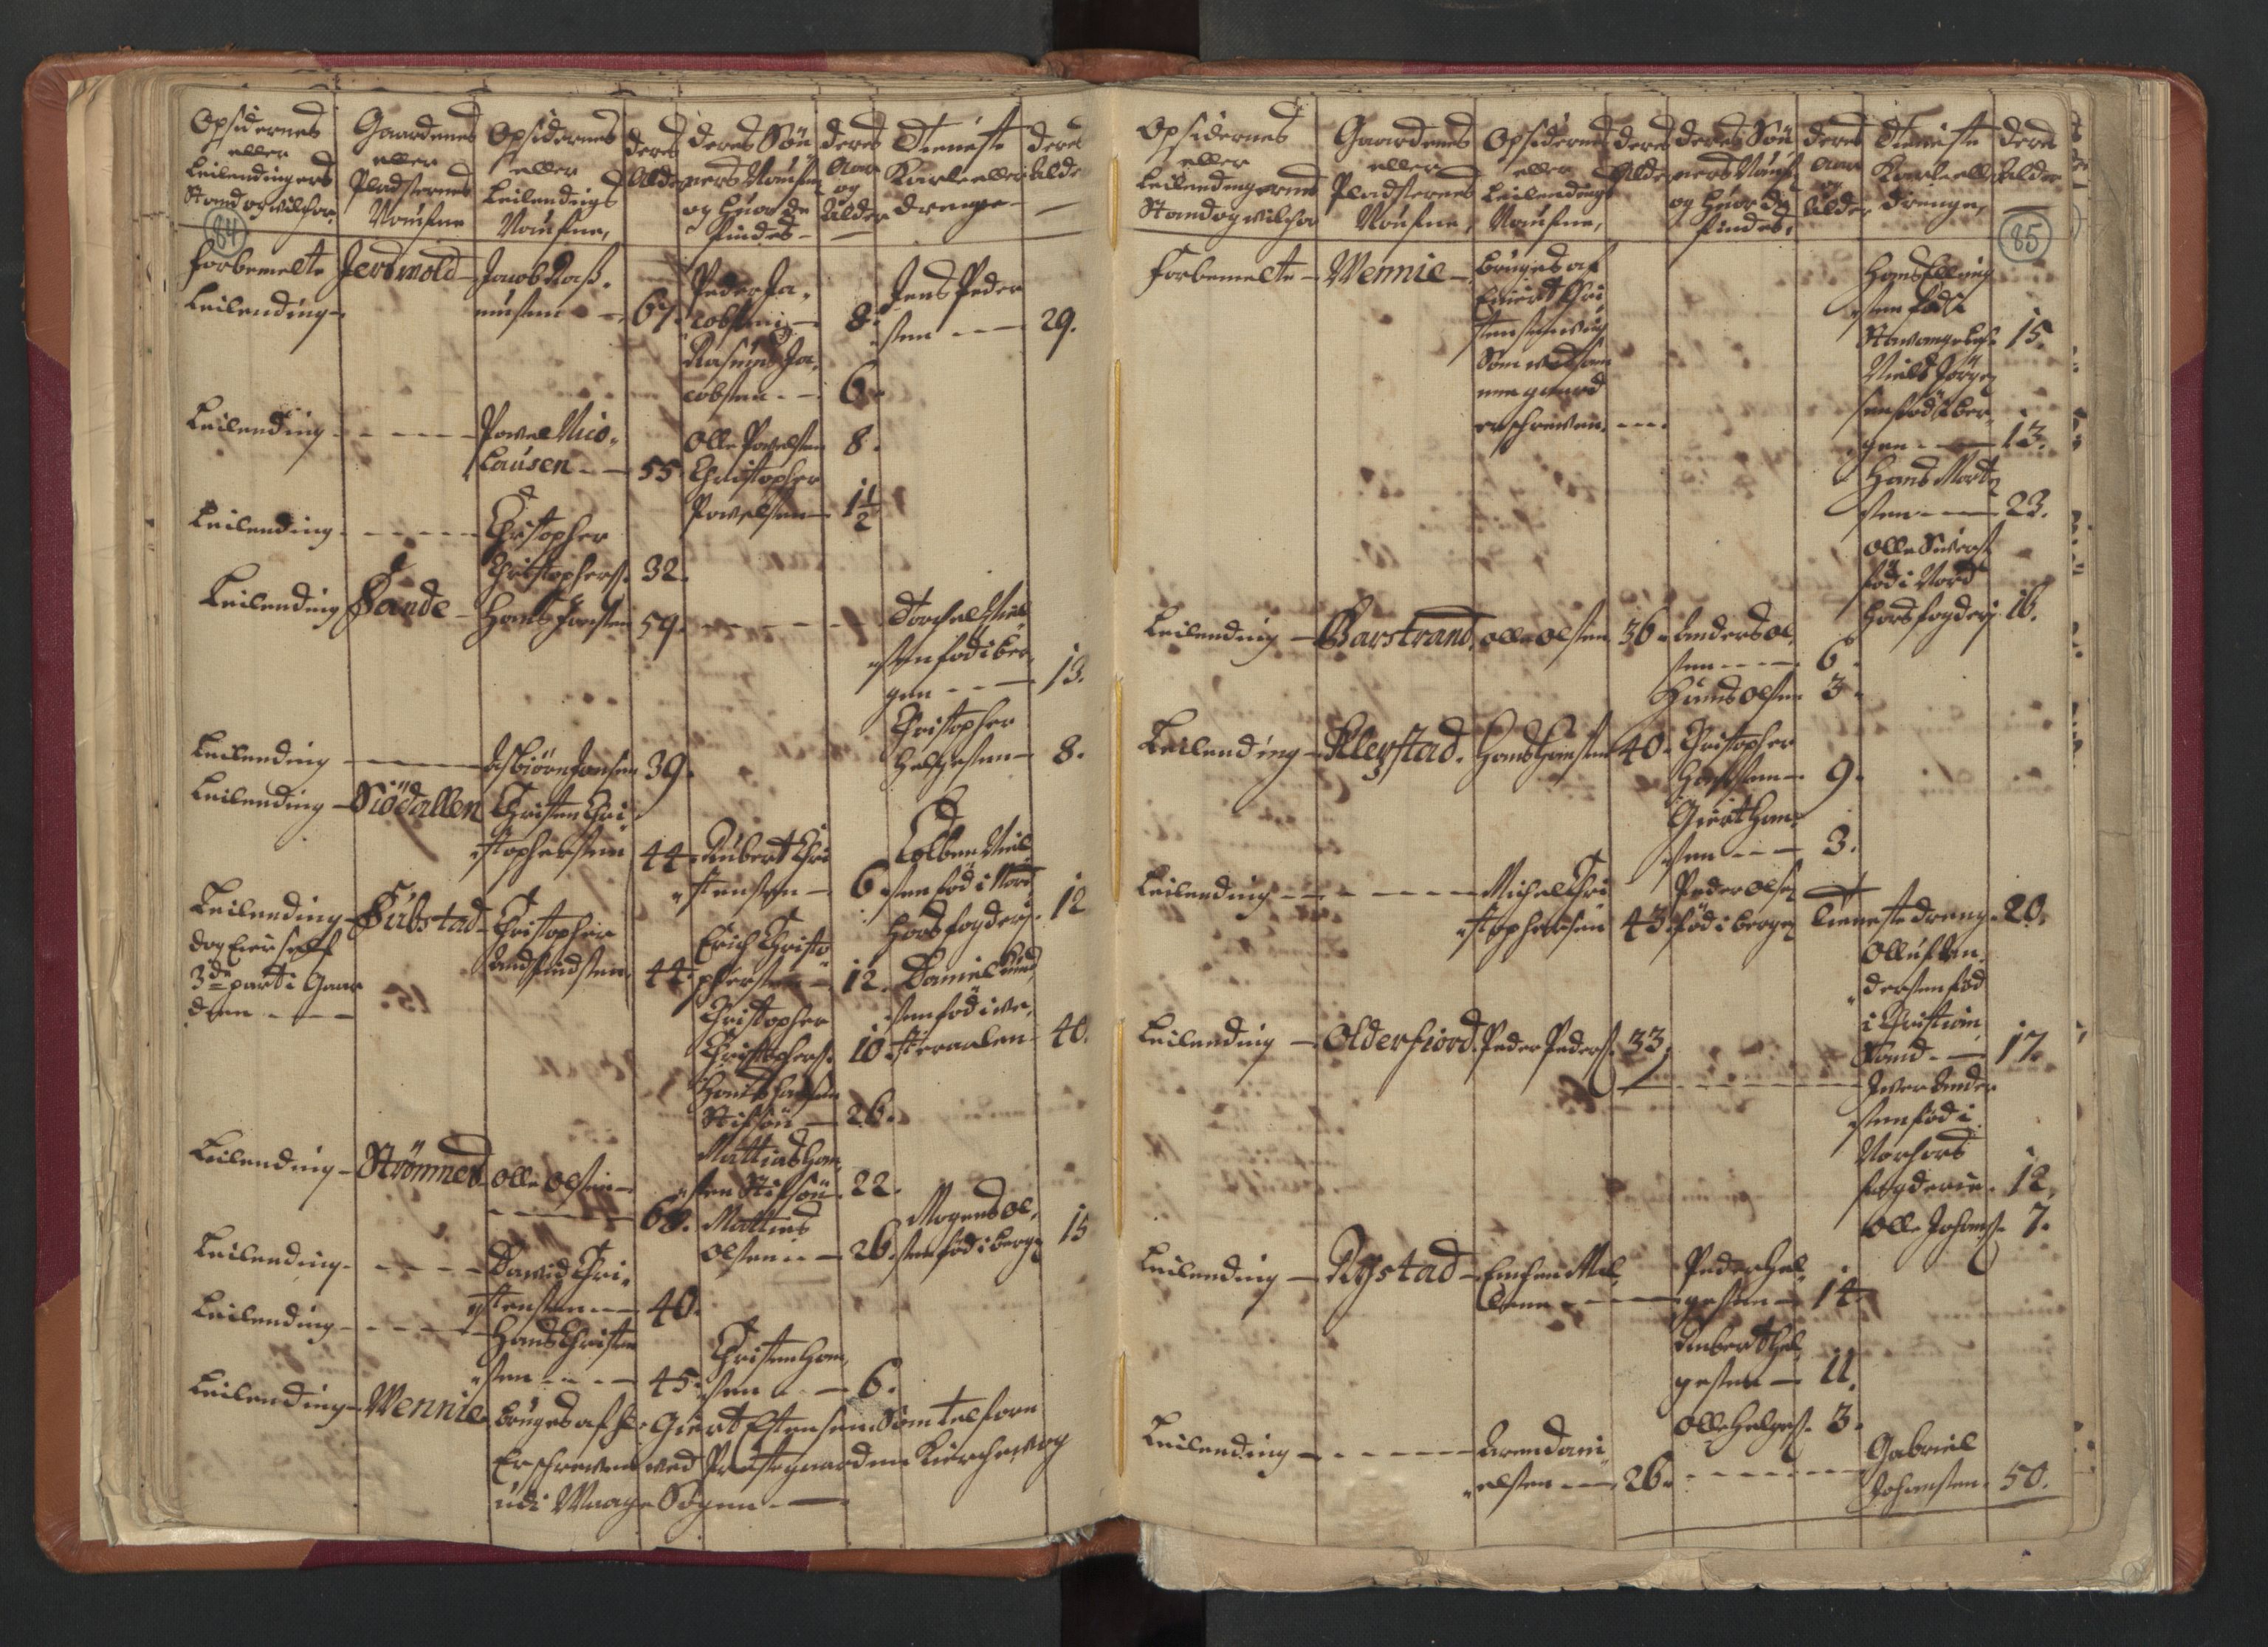 RA, Manntallet 1701, nr. 18: Vesterålen, Andenes og Lofoten fogderi, 1701, s. 84-85